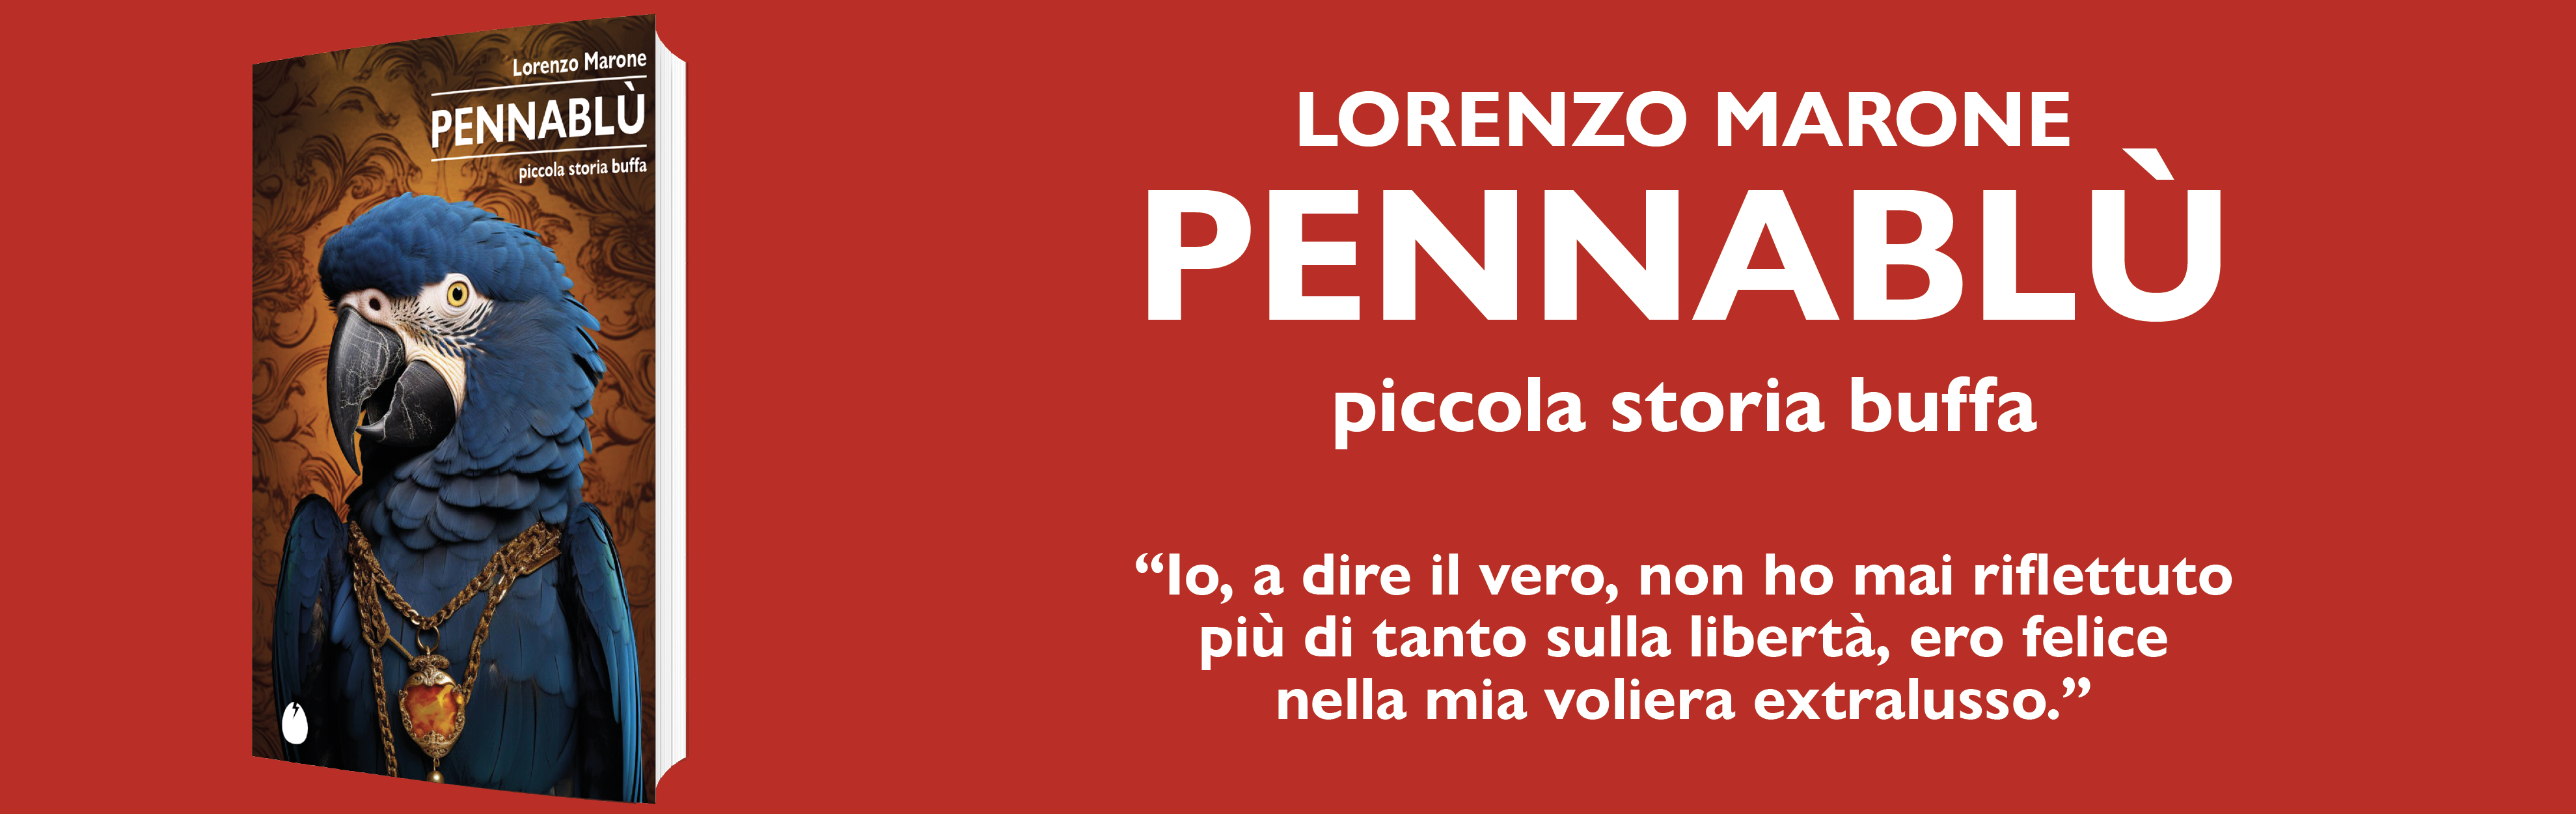 Pennablù - Lorenzo Marone